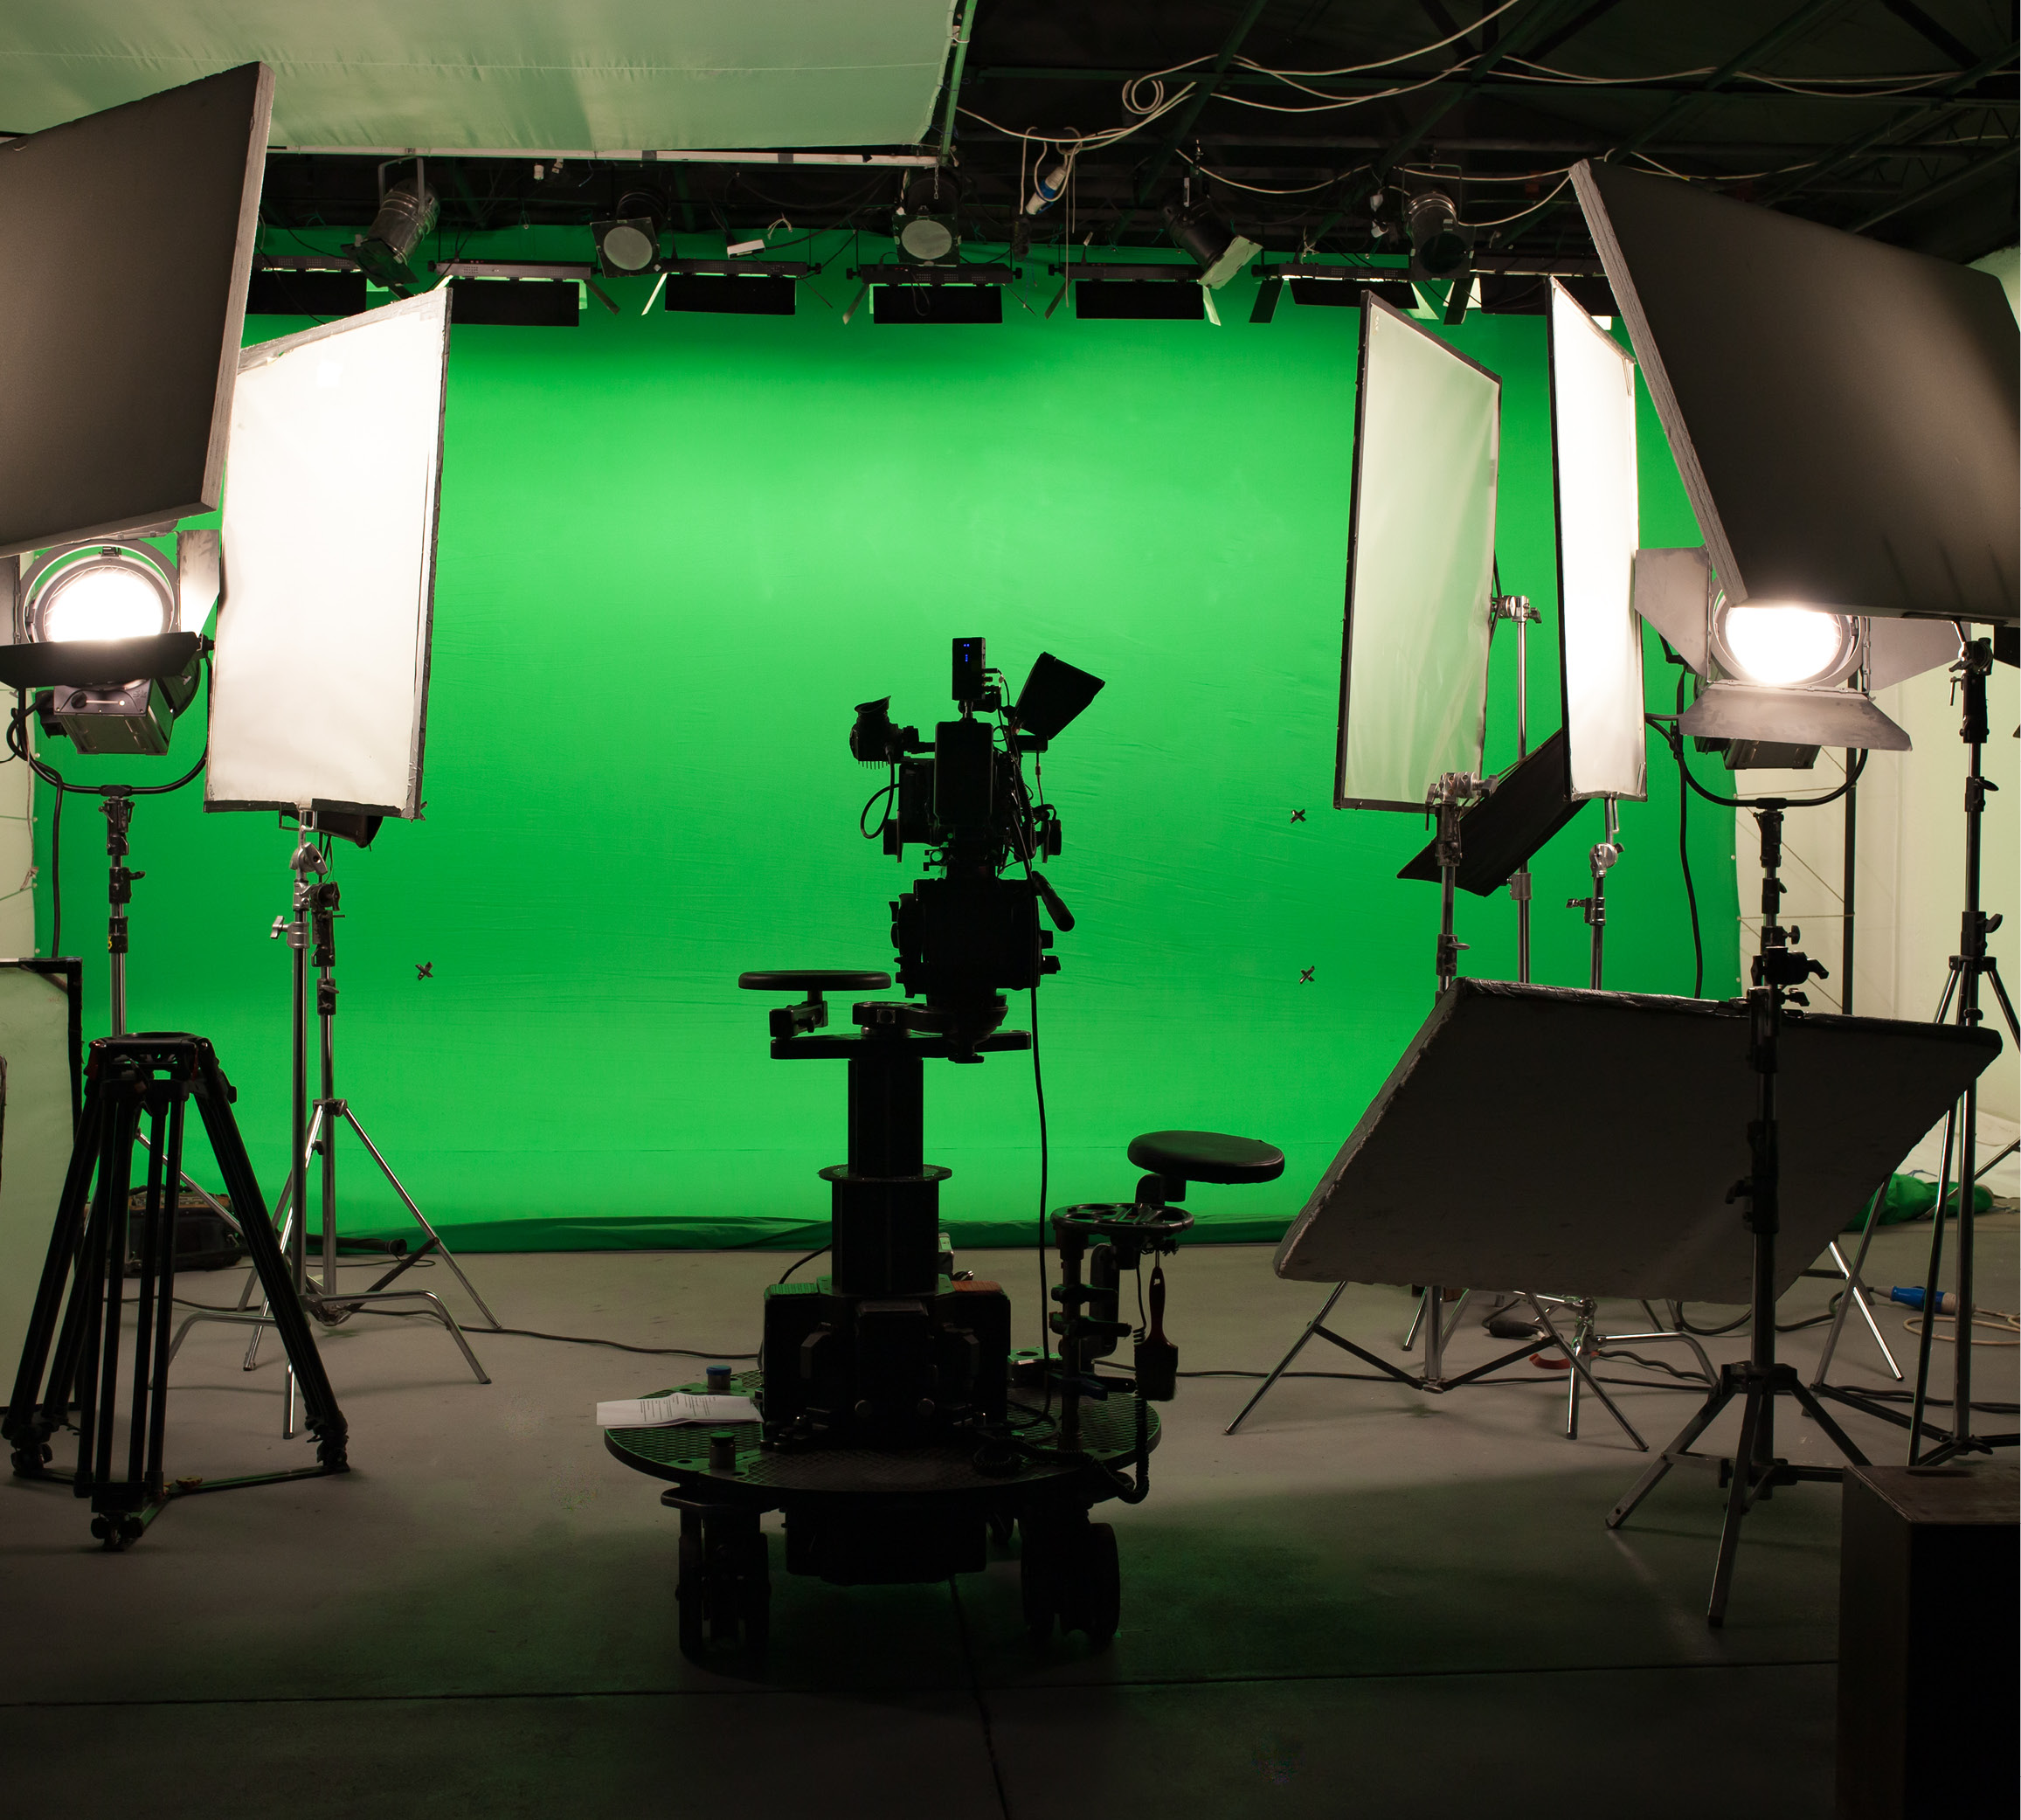 Green screen studio with lighting and film equipment